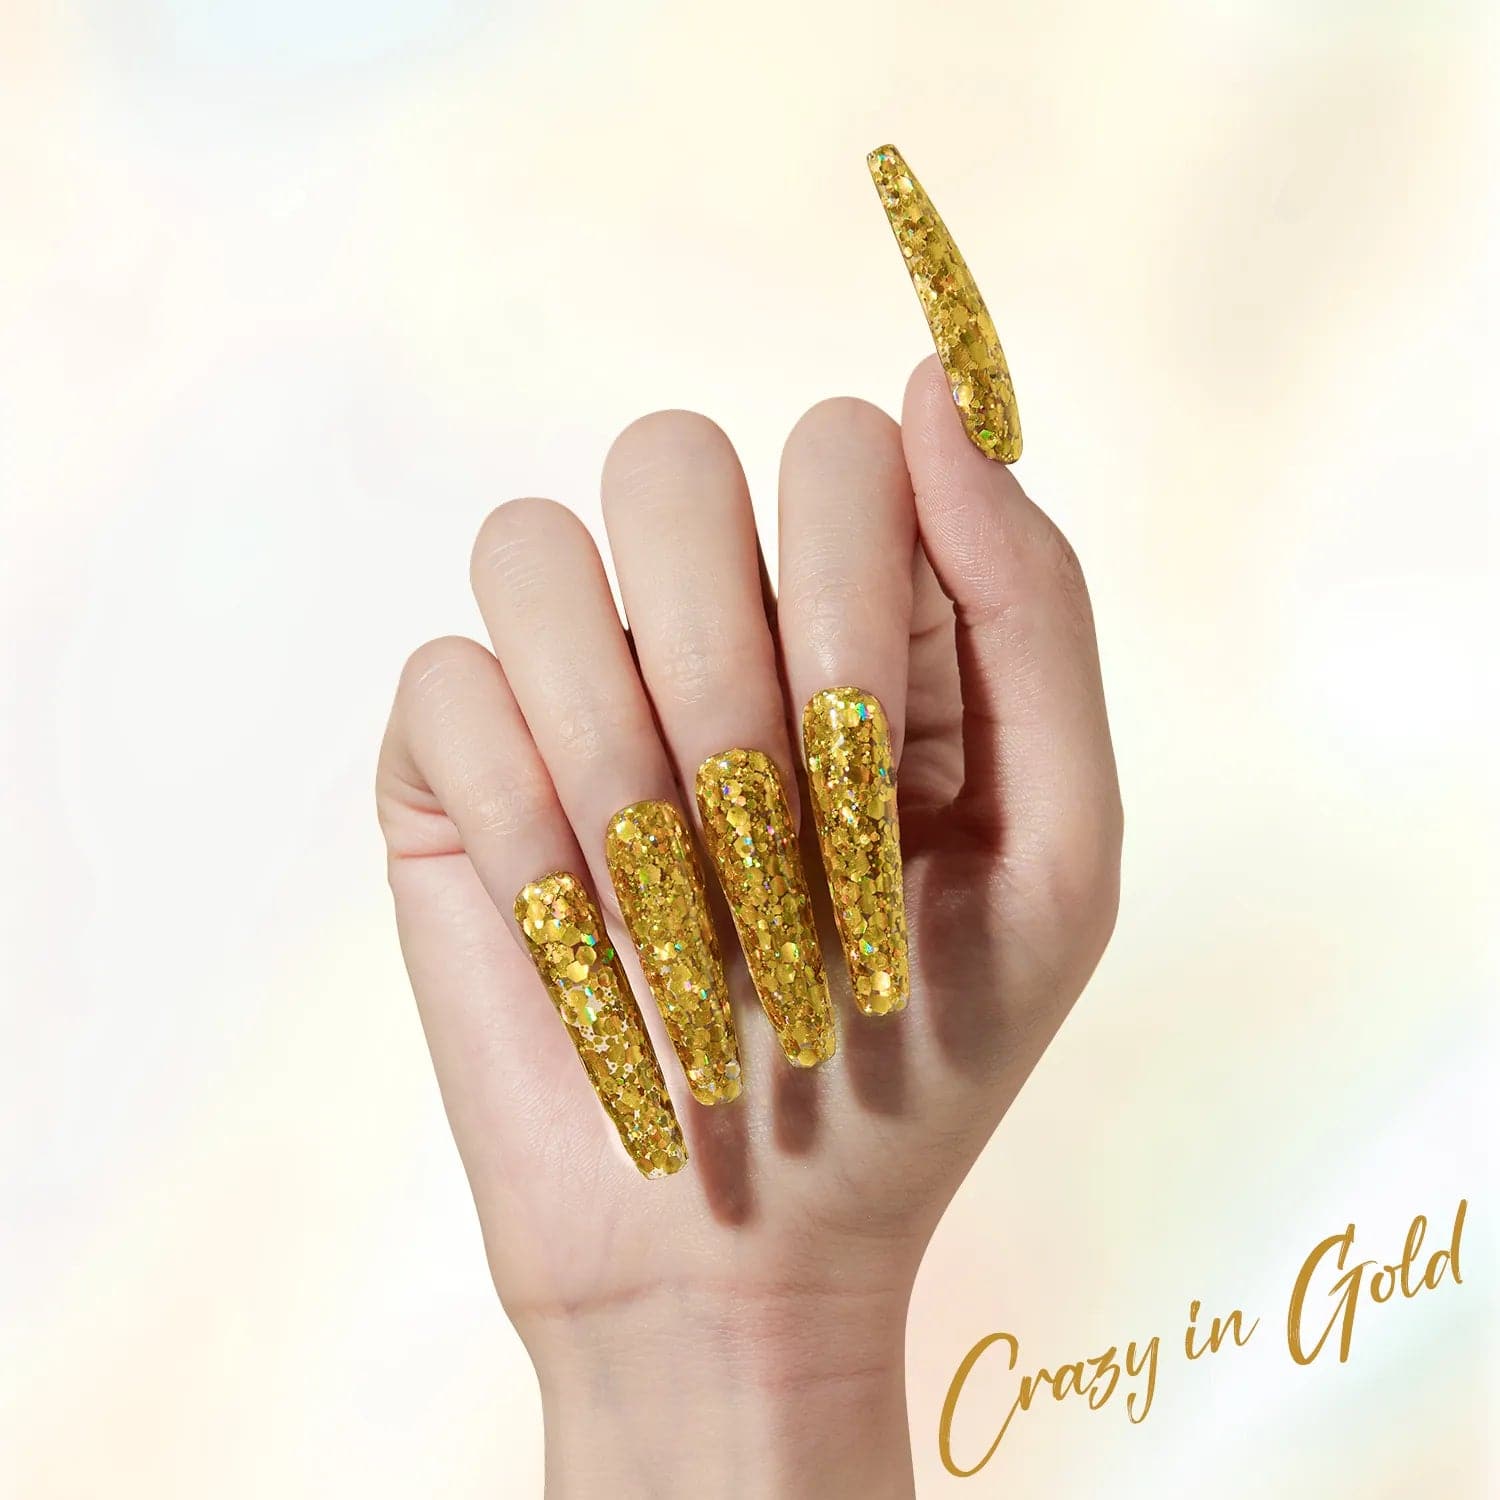 Crazy In Gold - Nail Art Glitter - MODELONES.com